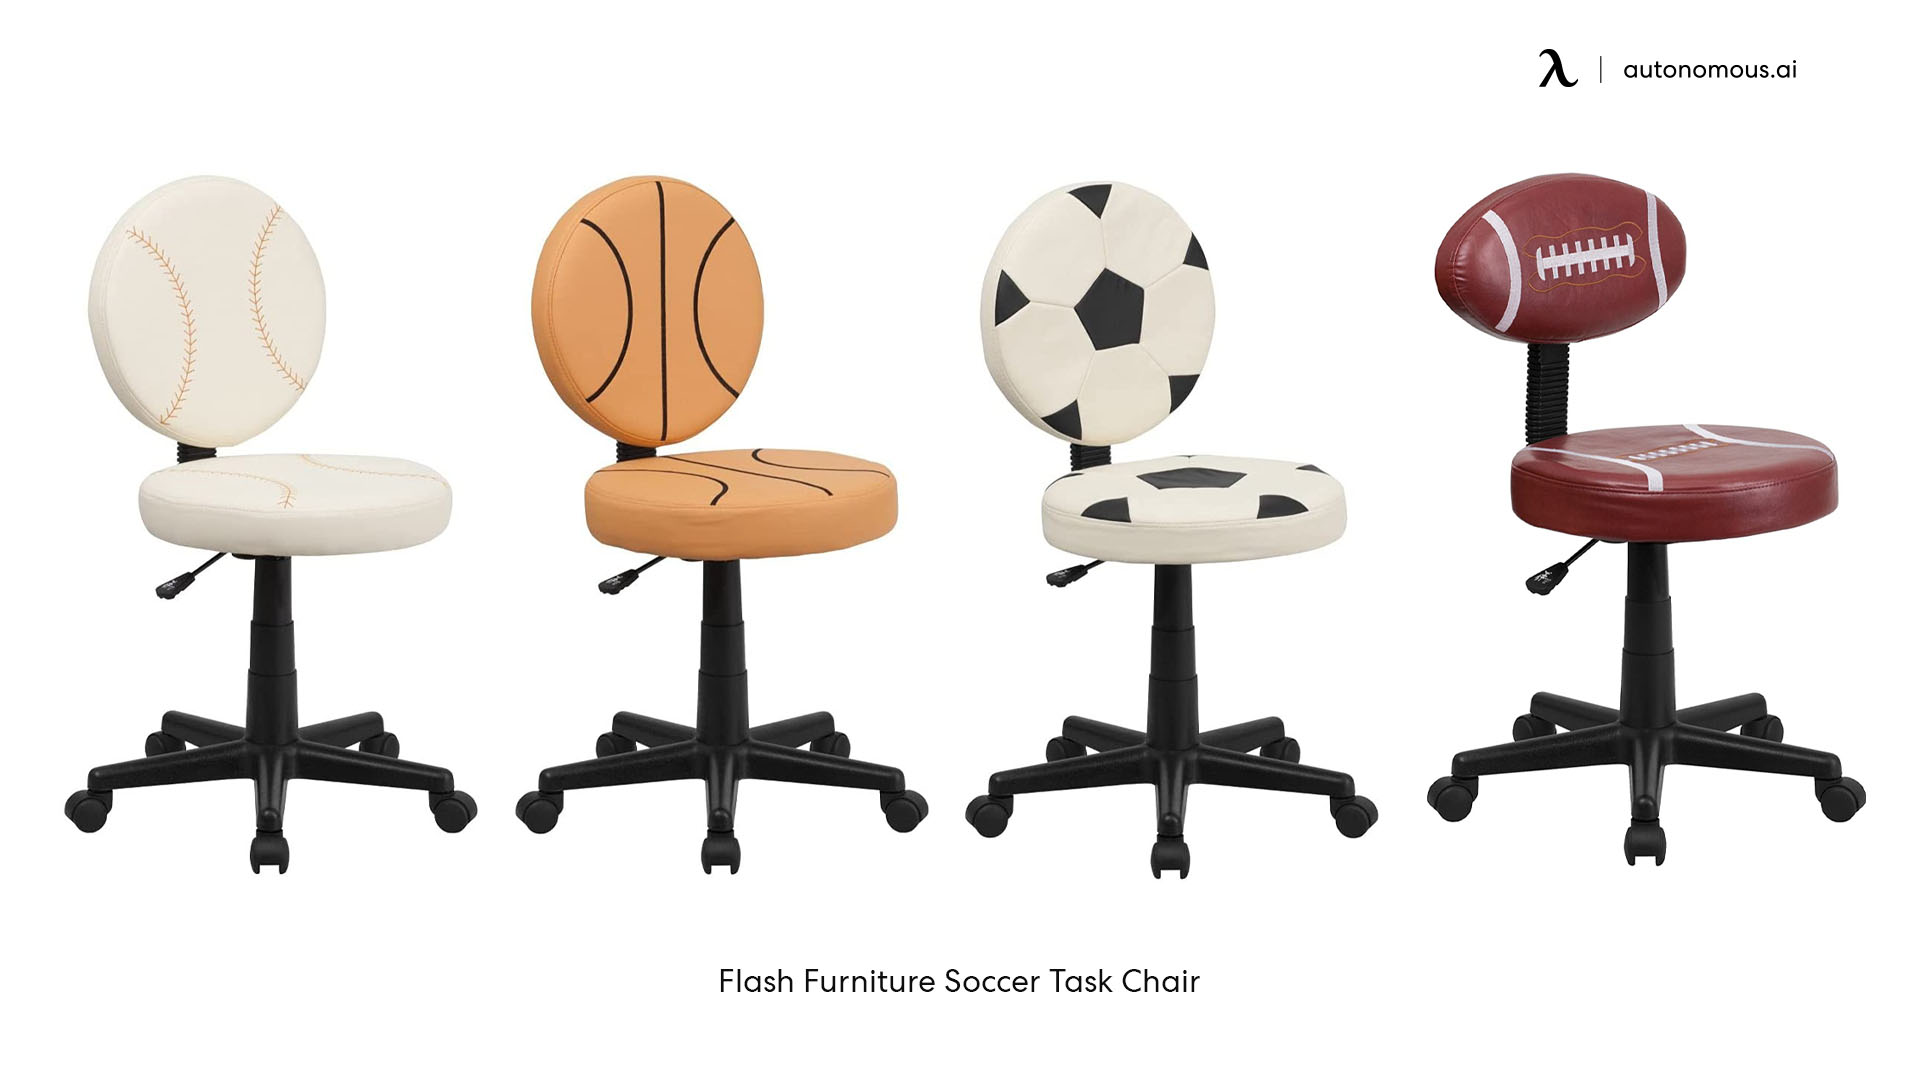 Flash Furniture Soccer Task Chair